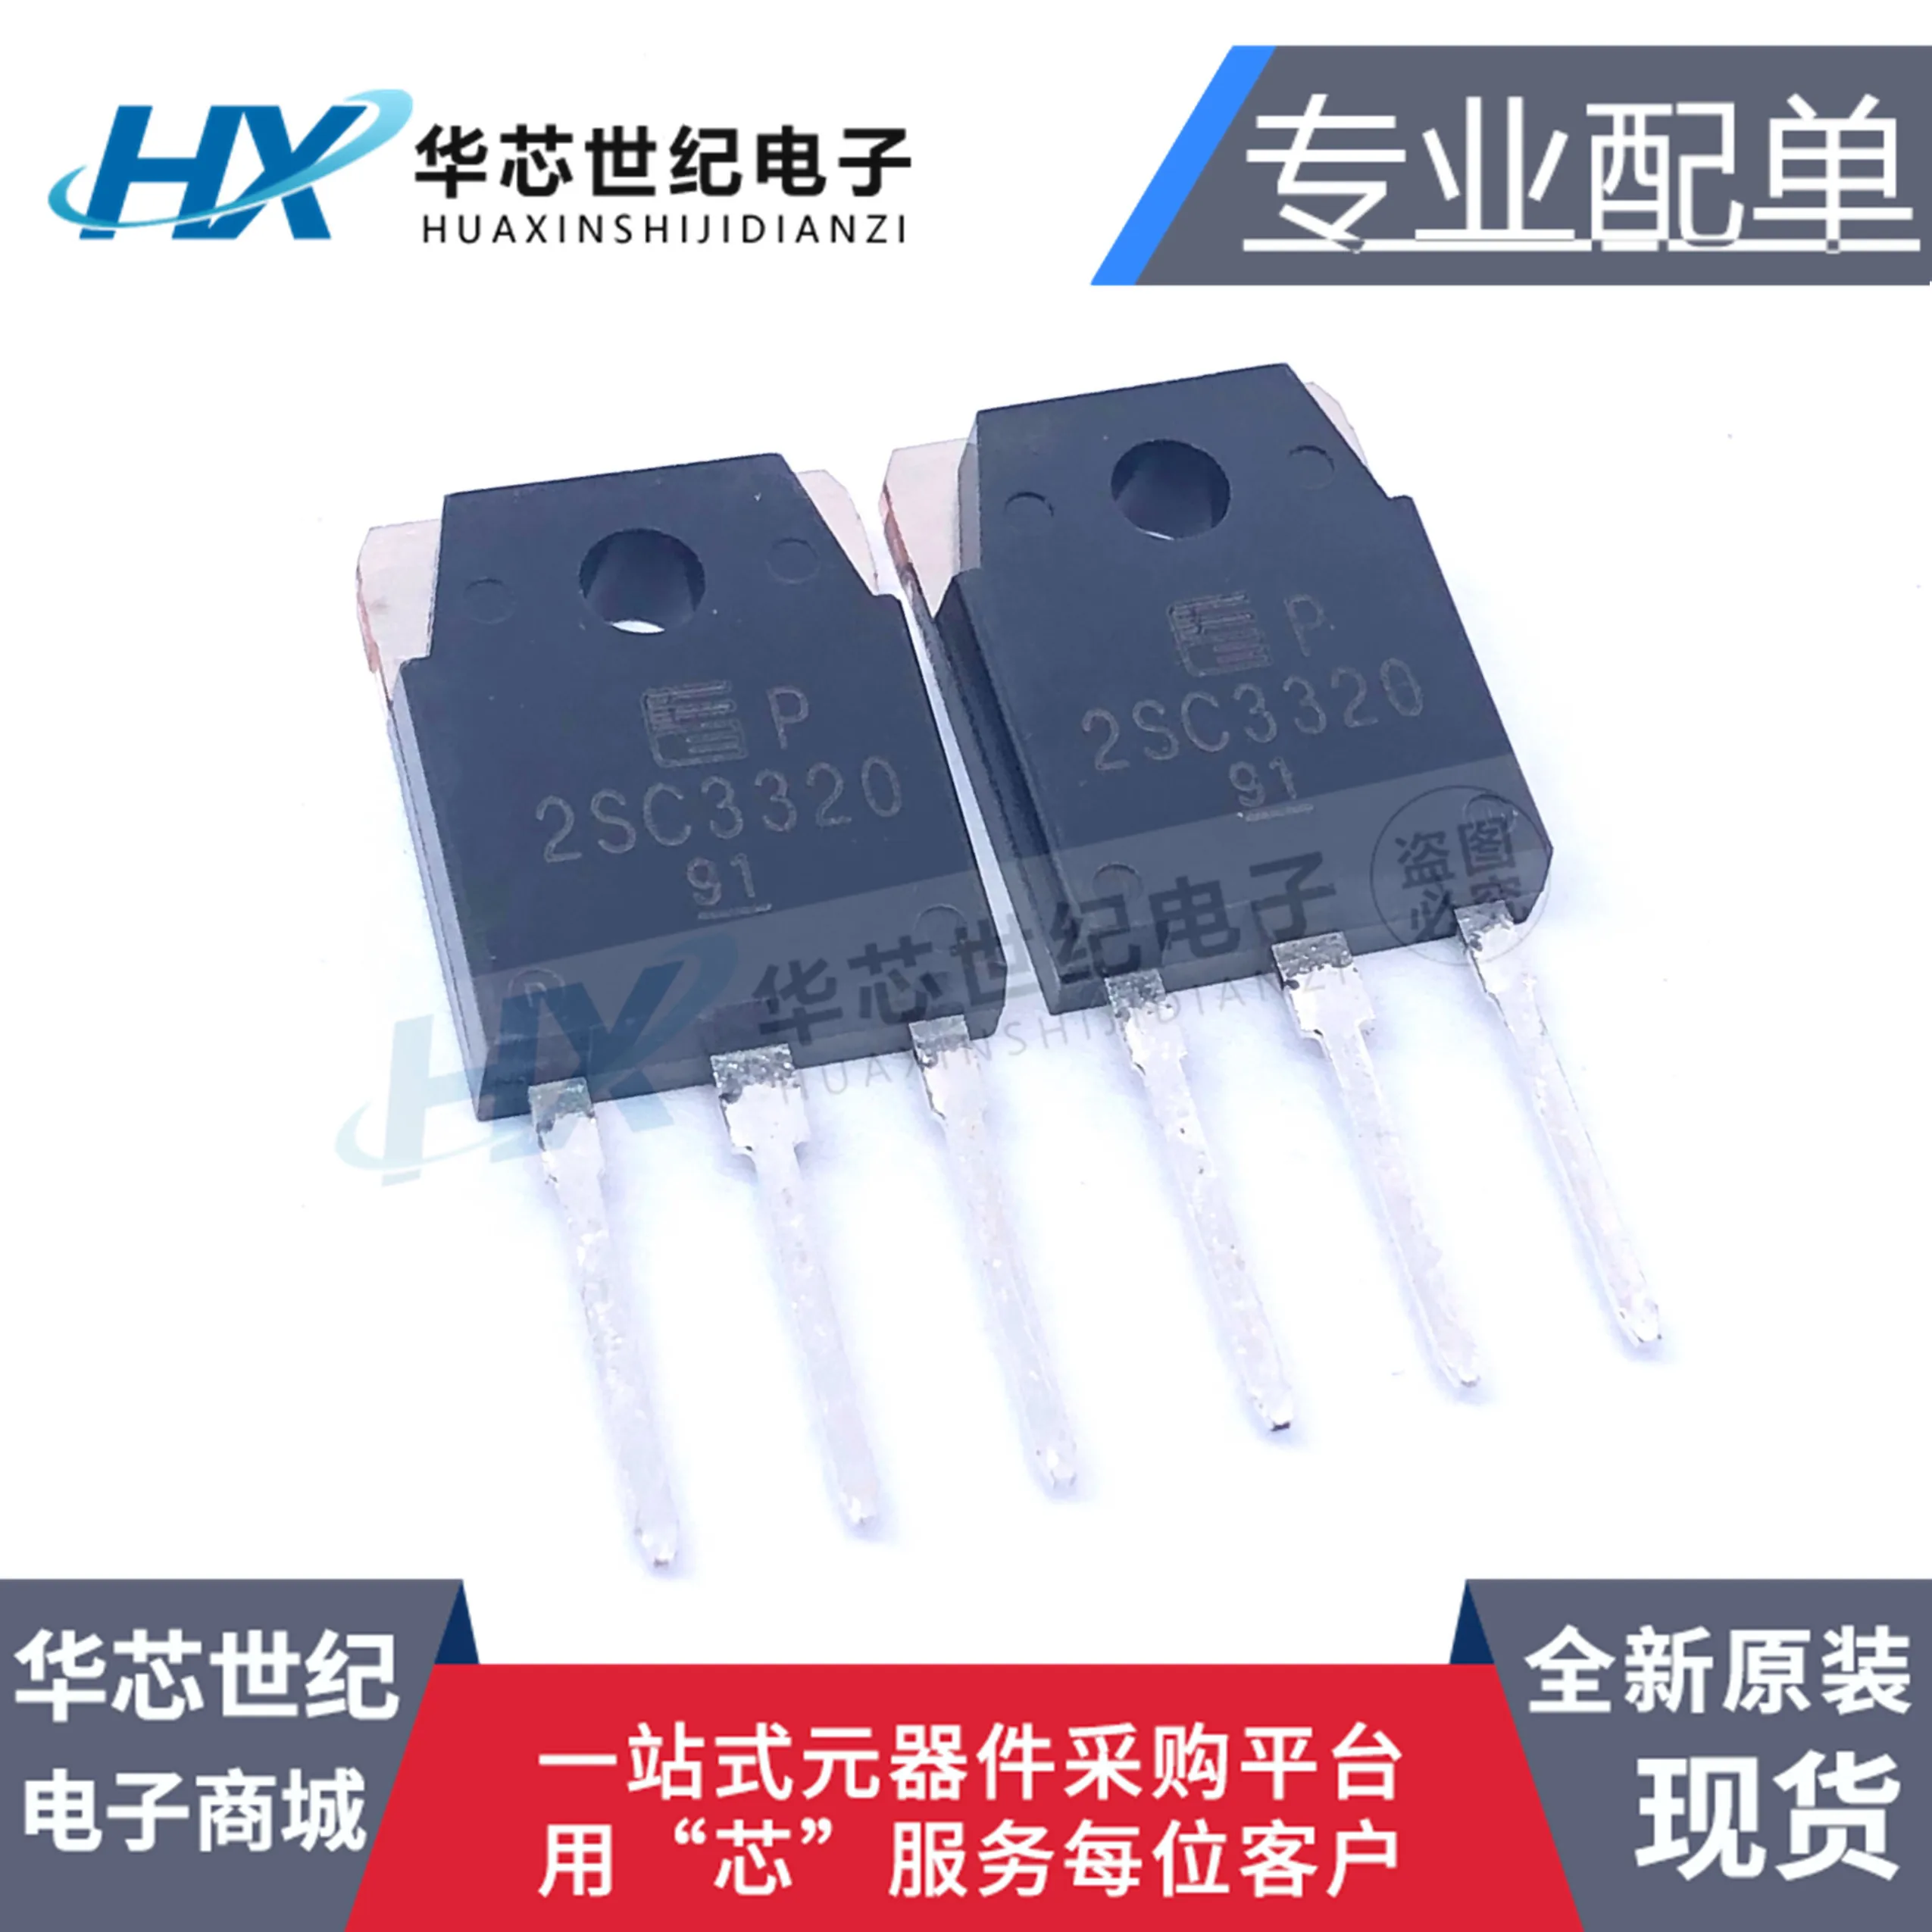 

30pcs original new 2SC33320 C3320 15A 500V TO-3P high-power switching power supply transistor